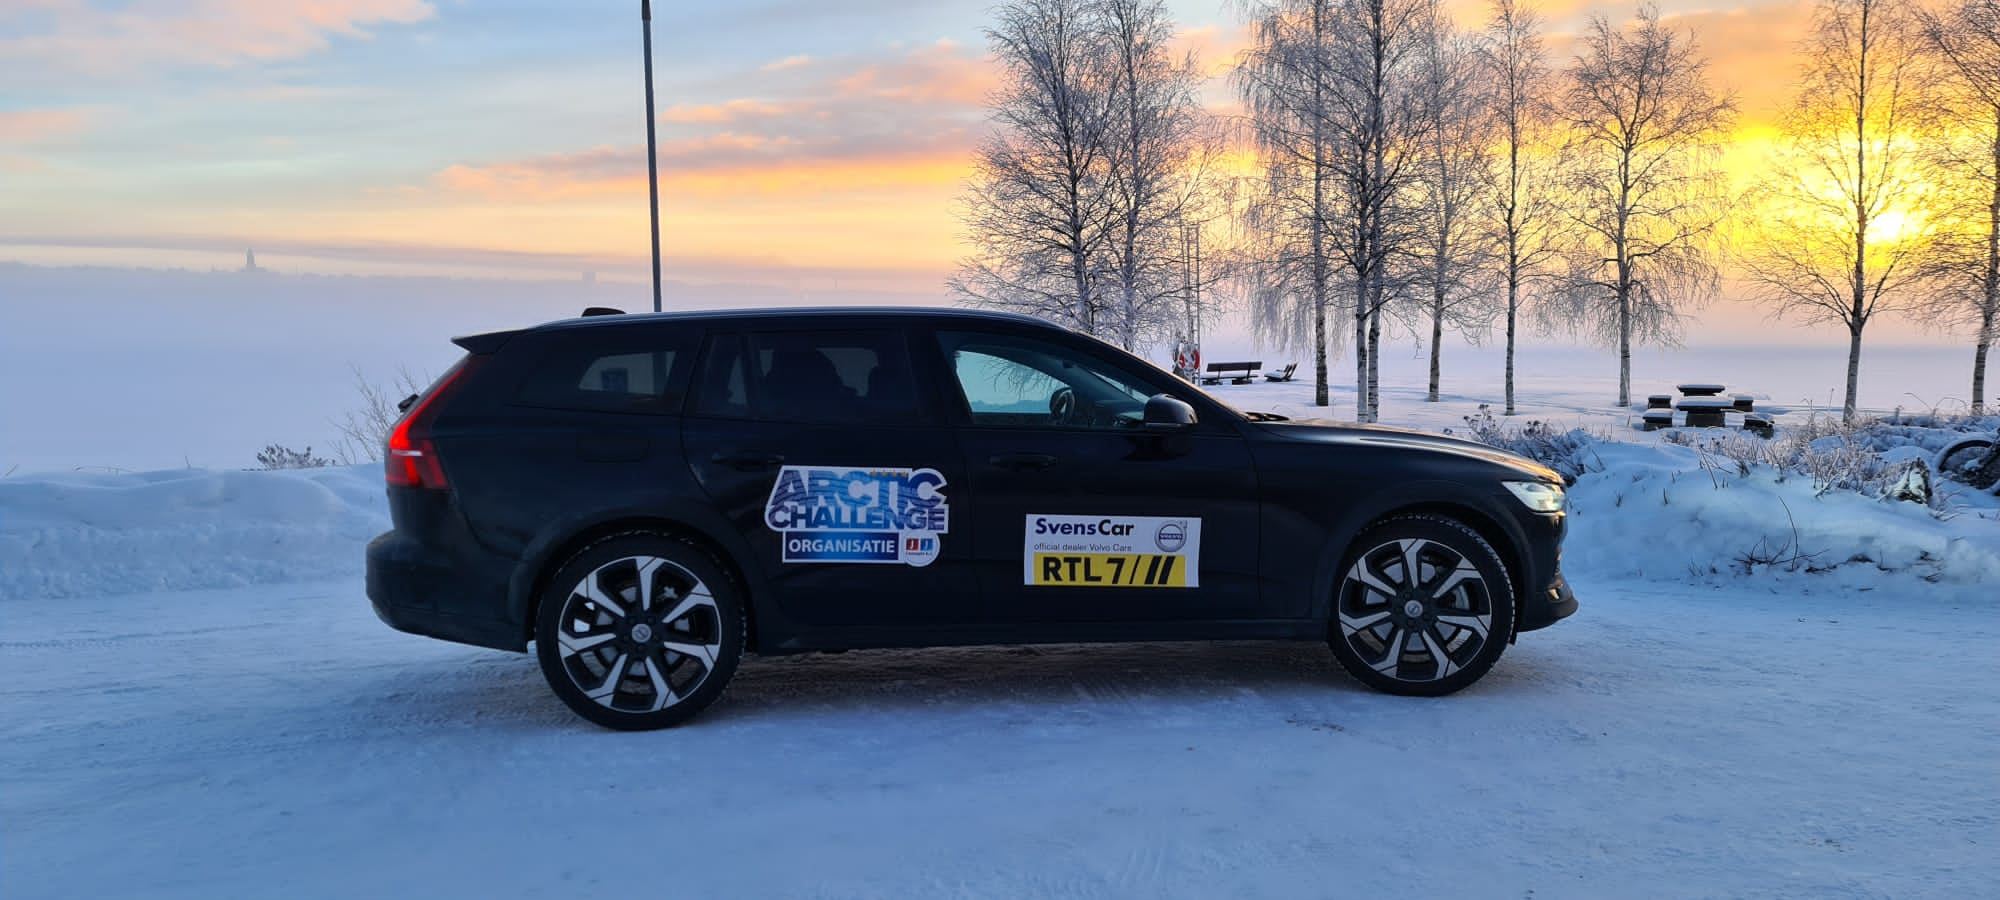 SvensCar Arctic Challenge Volvo